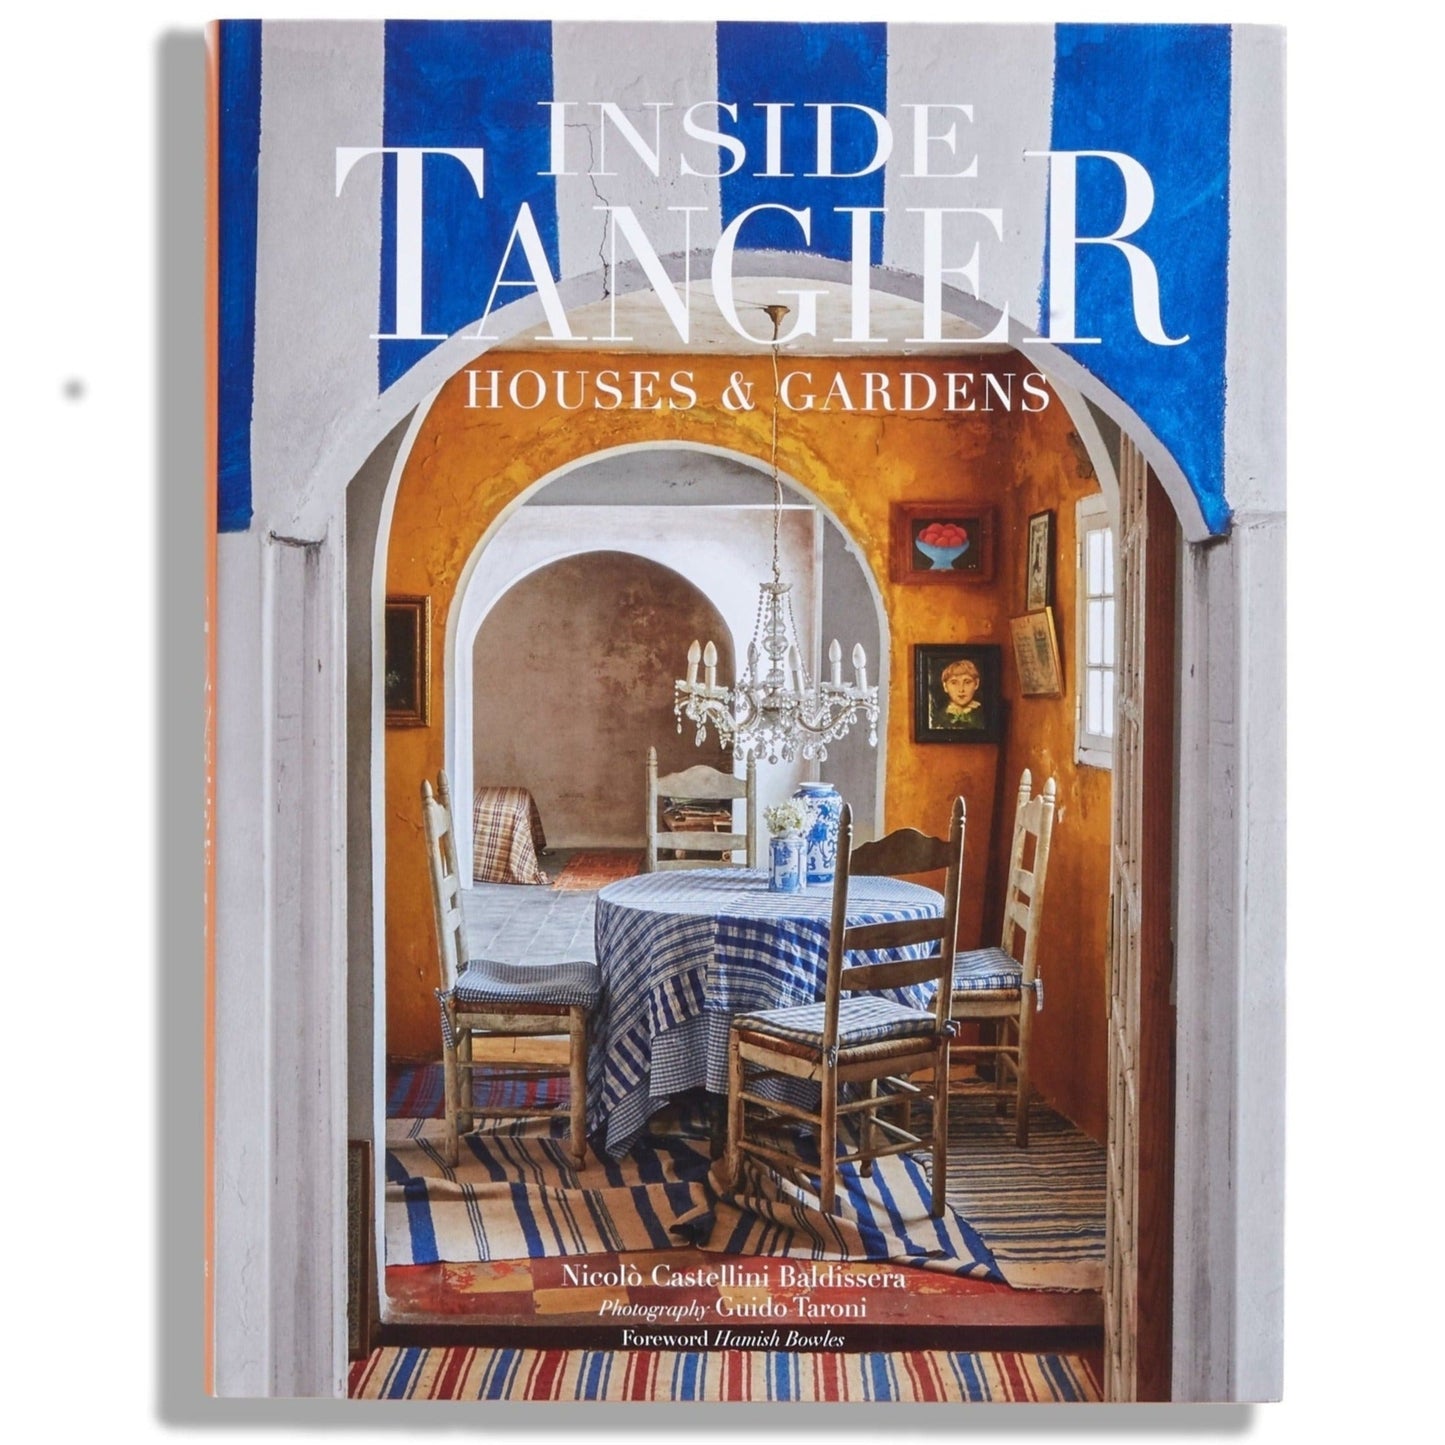 Inside Tangier: Houses & Gardens – Signature Edition